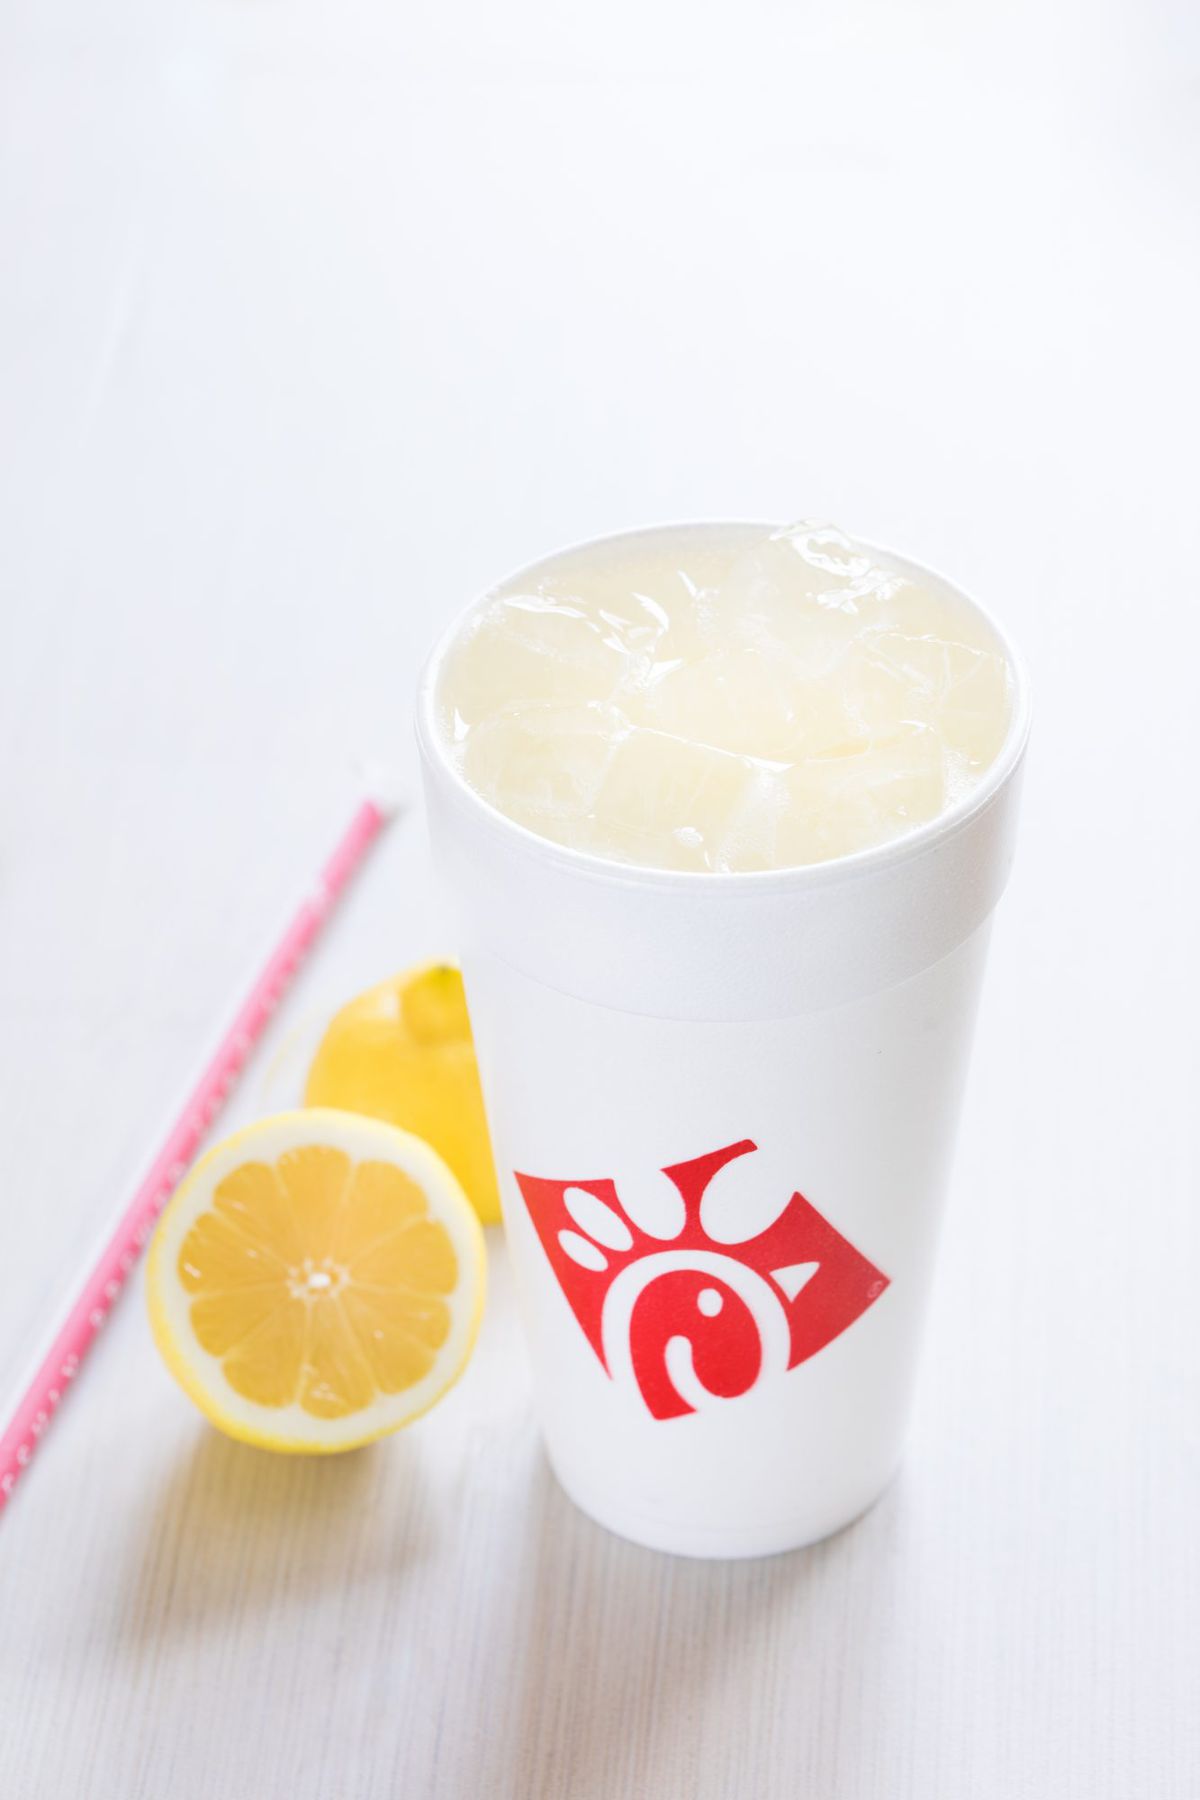 what is in chick-fil-a diet lemonade